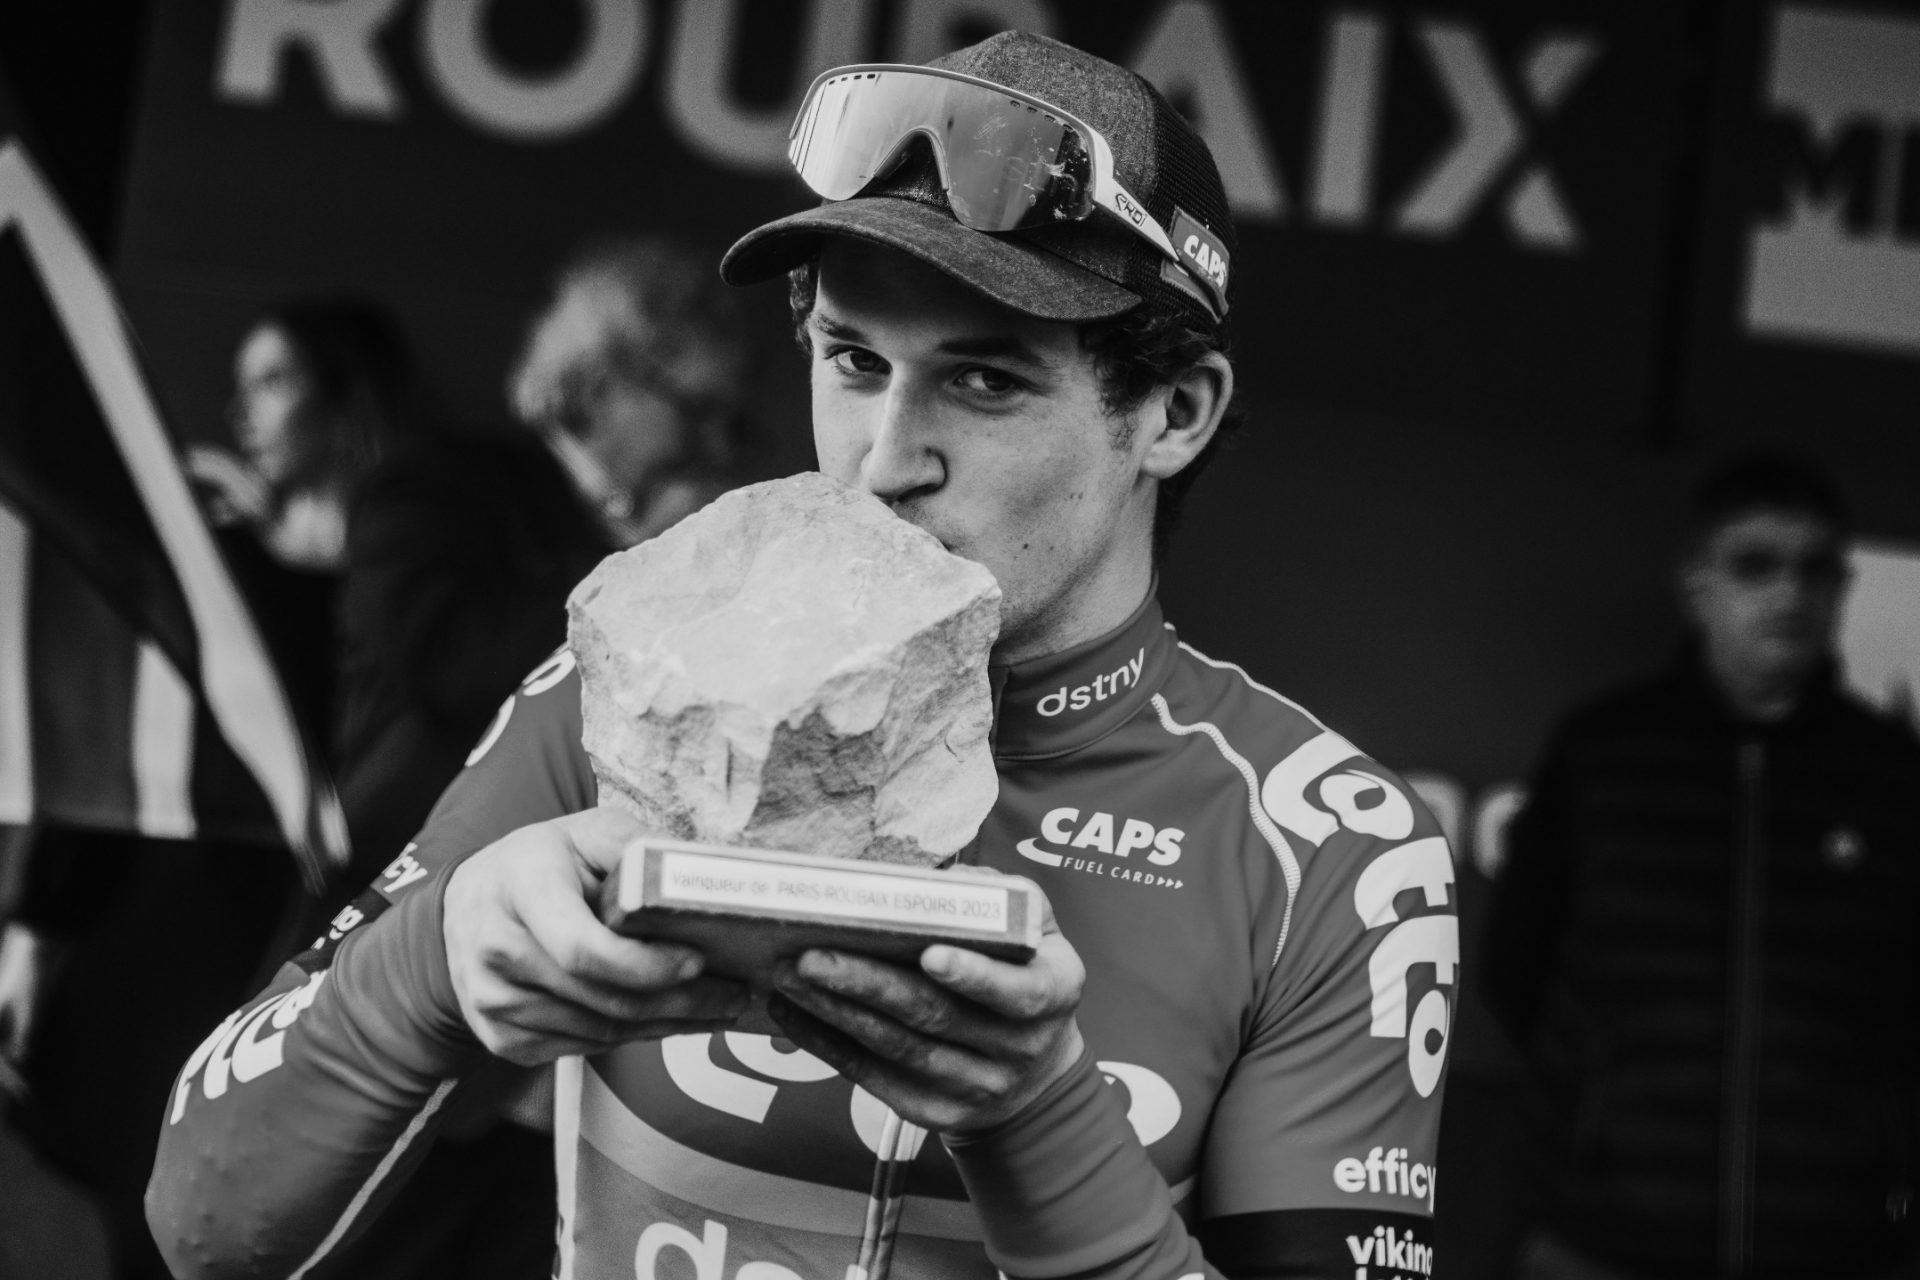 U23 Paris-Roubaix winner dies after road accident, aged 22